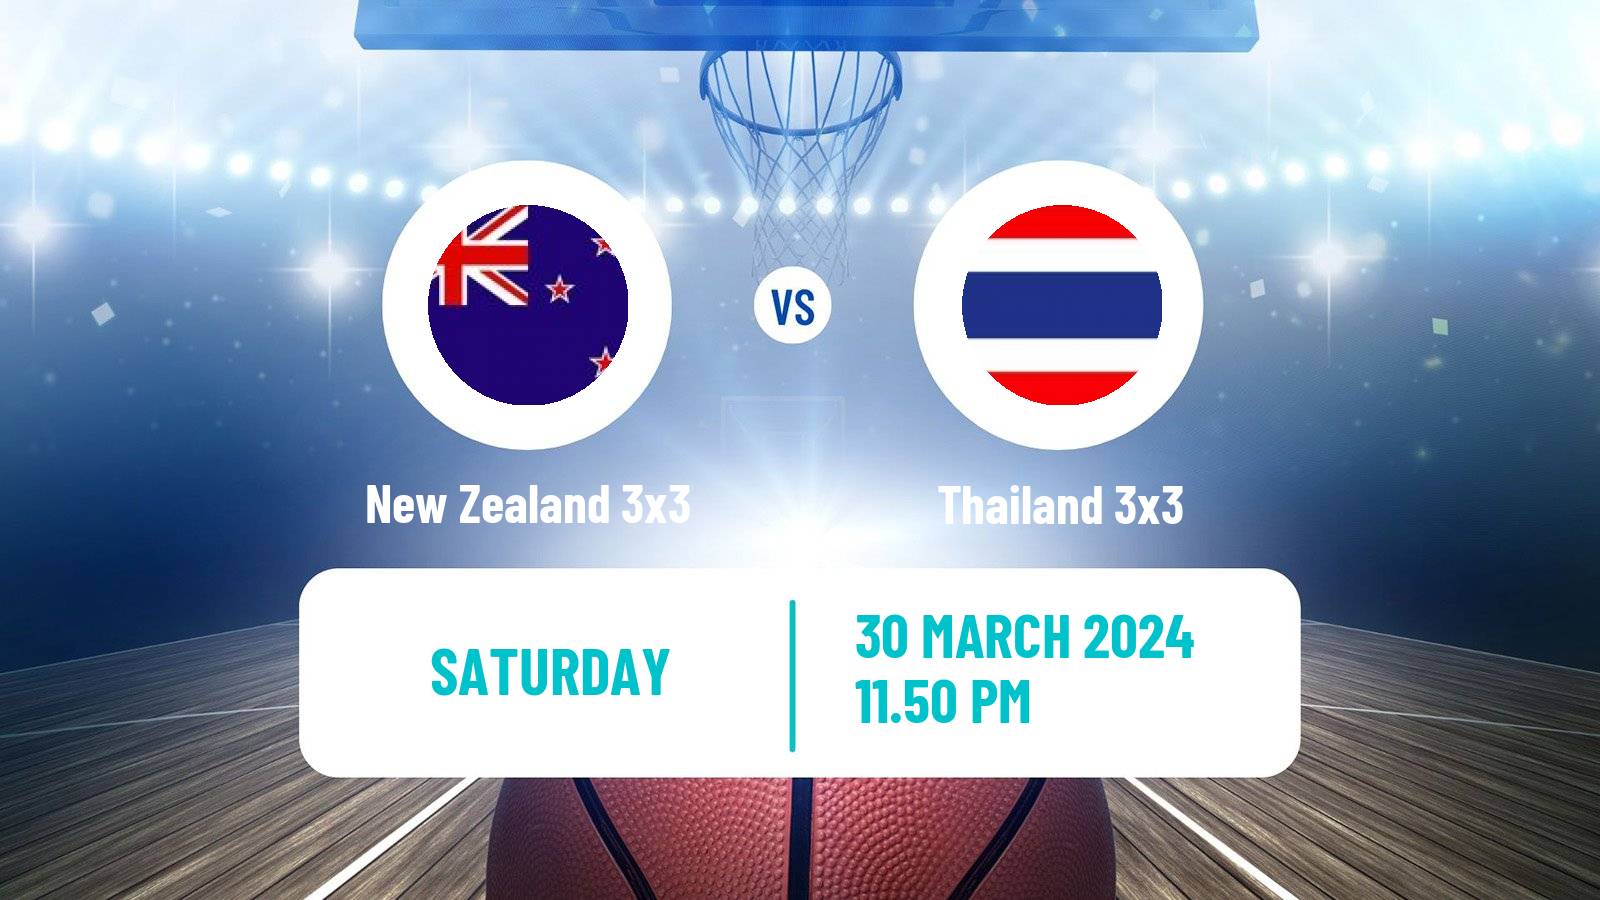 Basketball Asia Cup 3x3 New Zealand 3x3 - Thailand 3x3